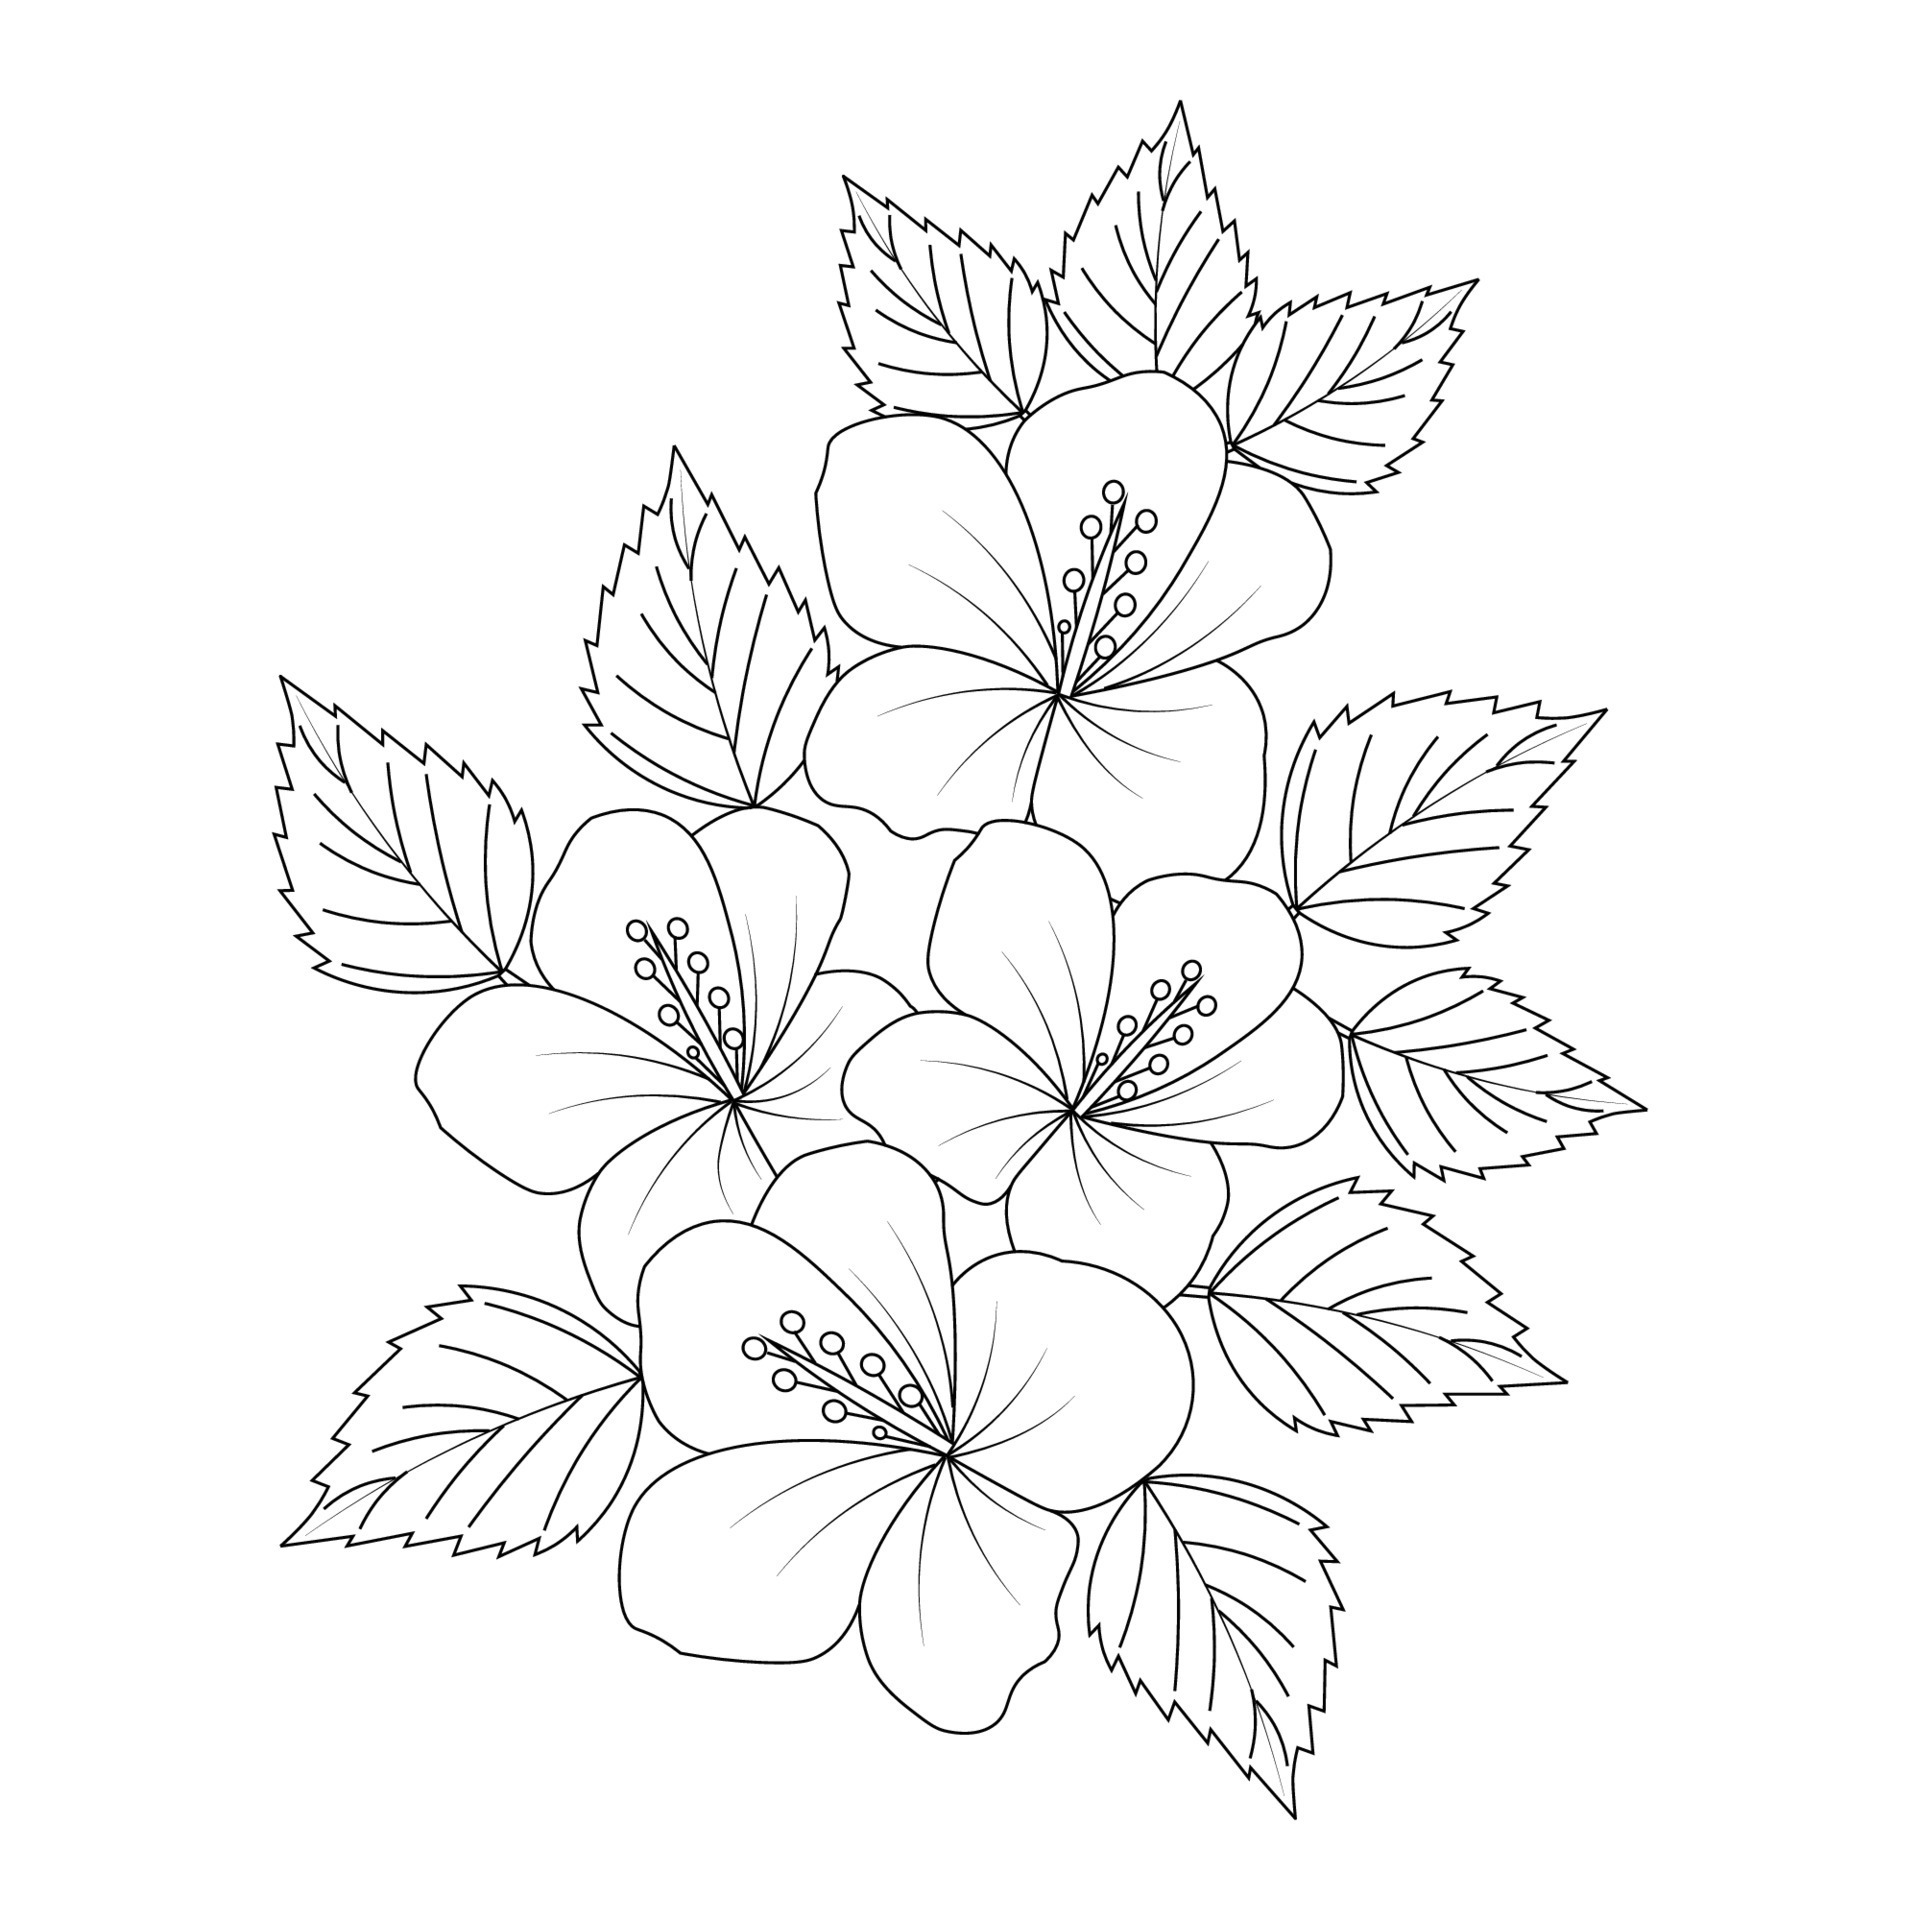 45 Beautiful and Simple Flower Drawings  Pencil Drawings